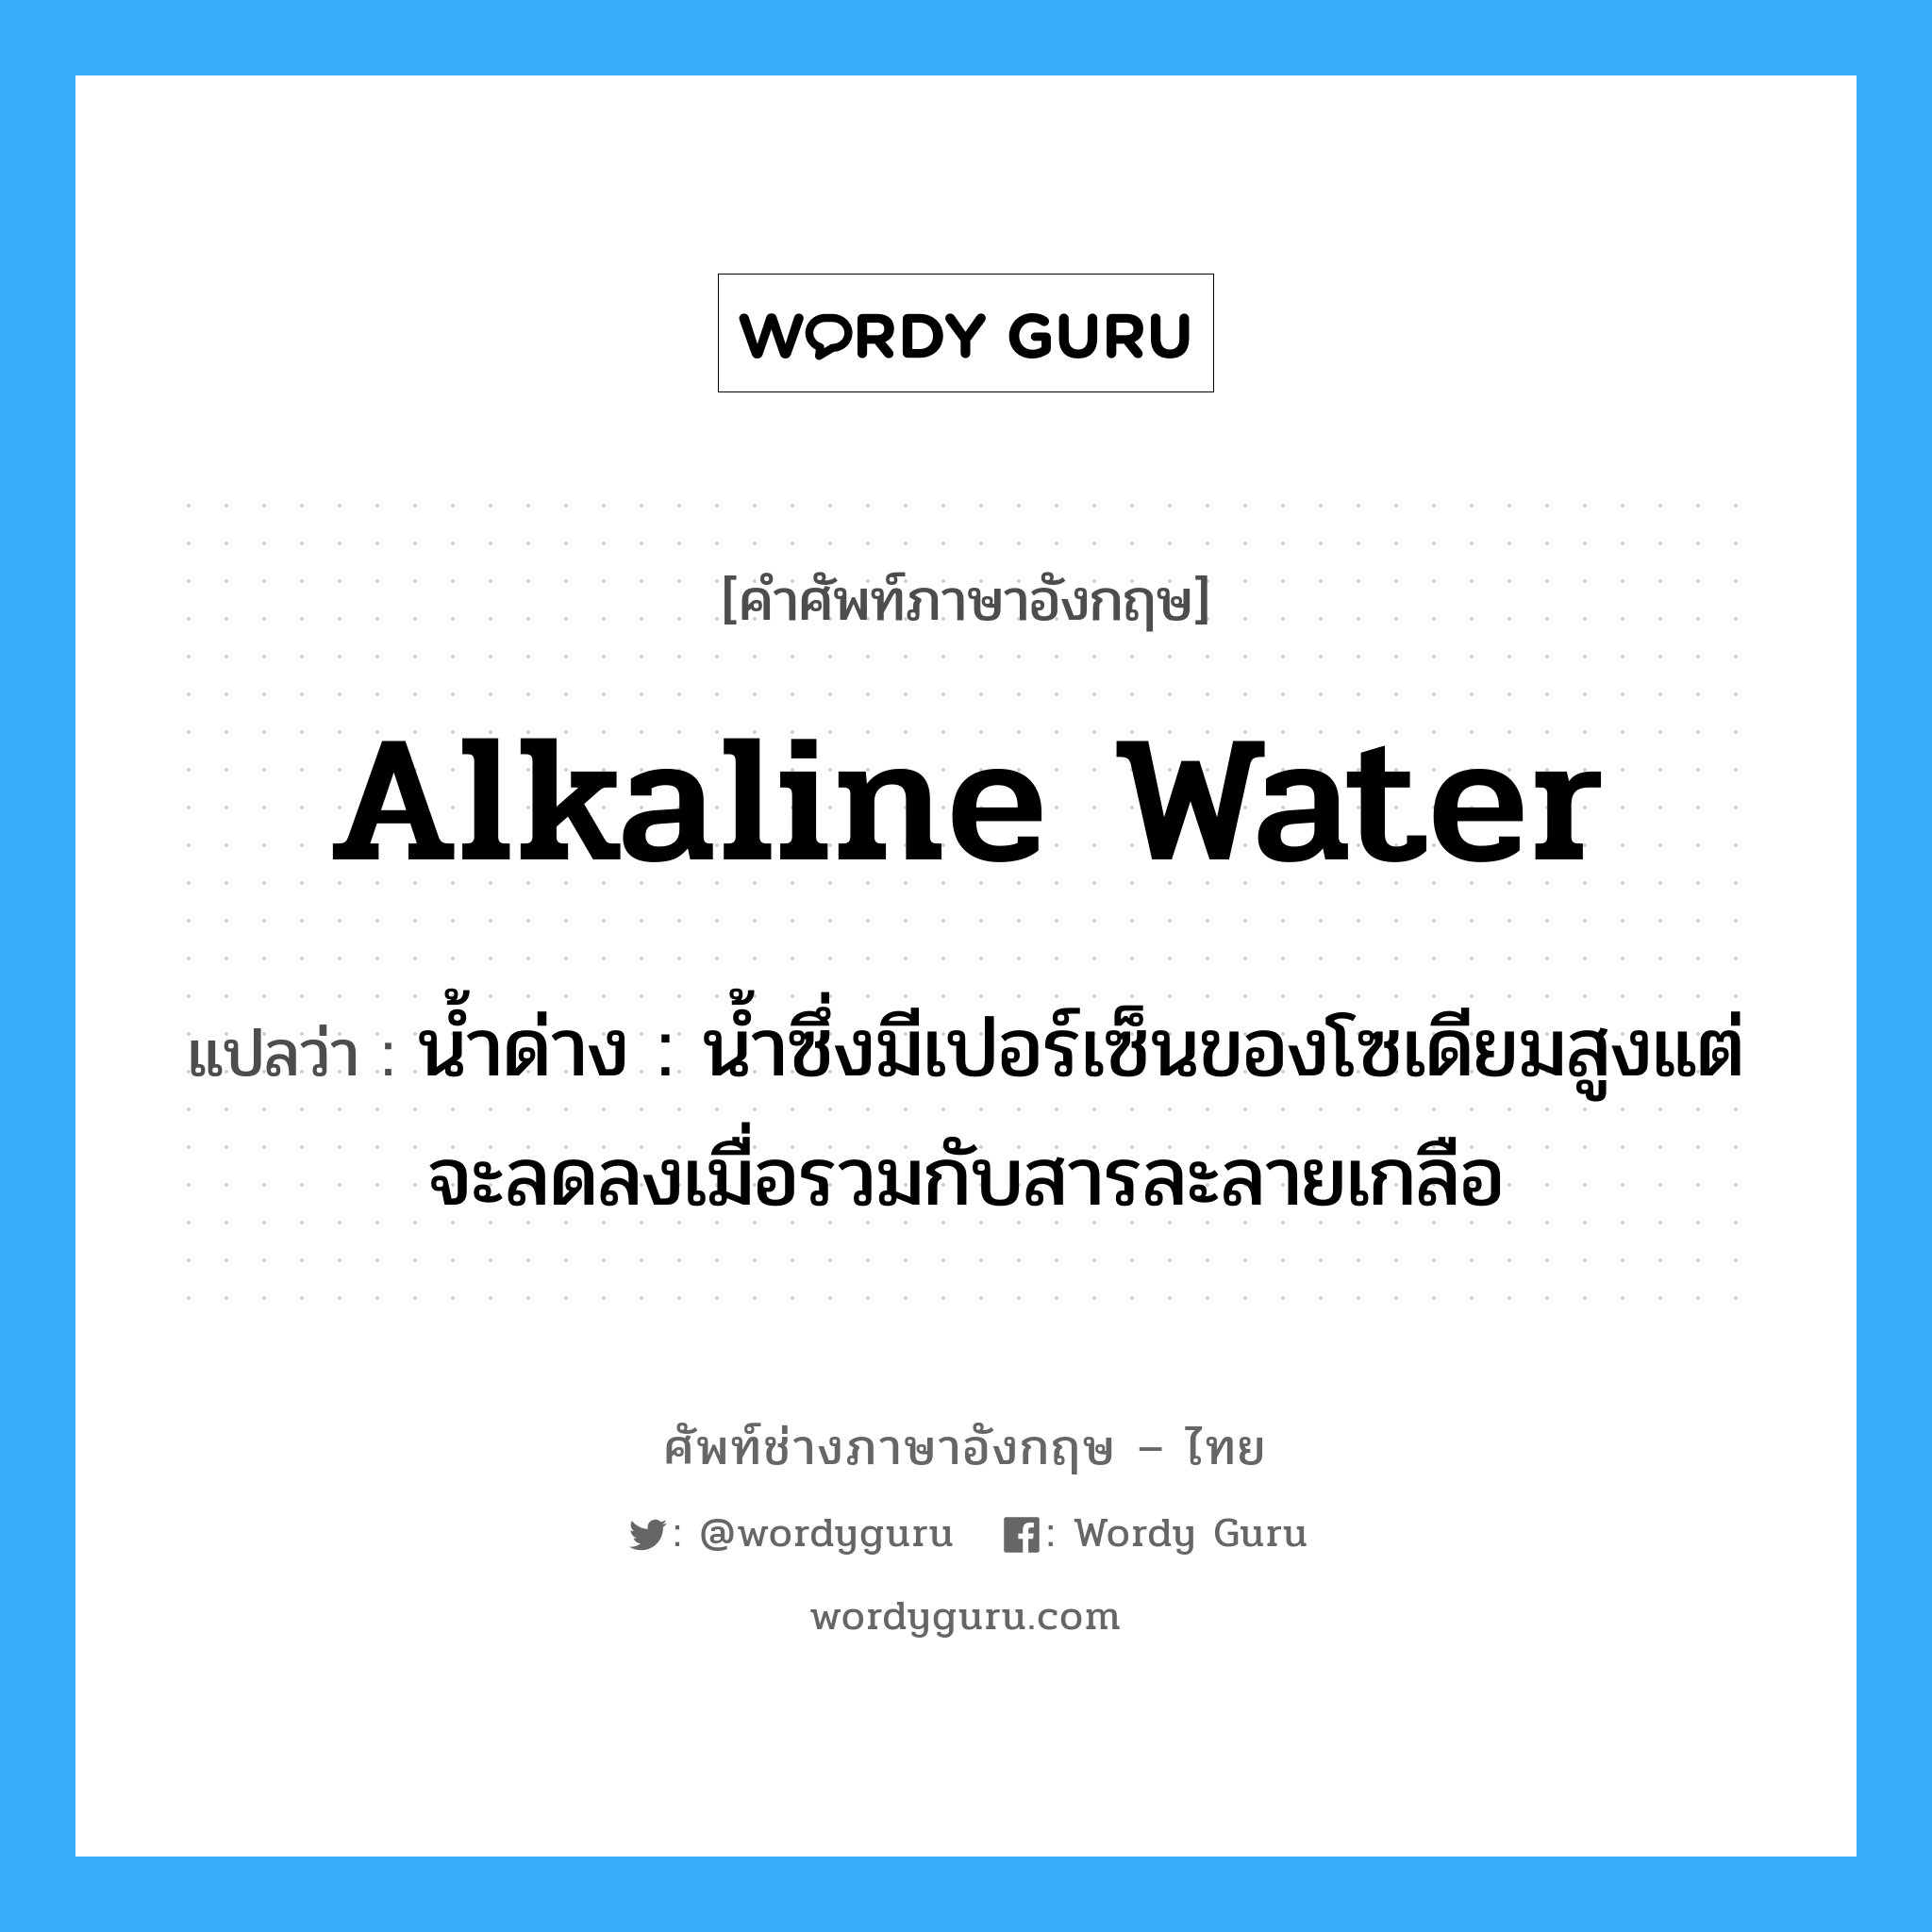 alkaline water แปลว่า?, คำศัพท์ช่างภาษาอังกฤษ - ไทย alkaline water คำศัพท์ภาษาอังกฤษ alkaline water แปลว่า น้ำด่าง : น้ำซึ่งมีเปอร์เซ็นของโซเดียมสูงแต่จะลดลงเมื่อรวมกับสารละลายเกลือ